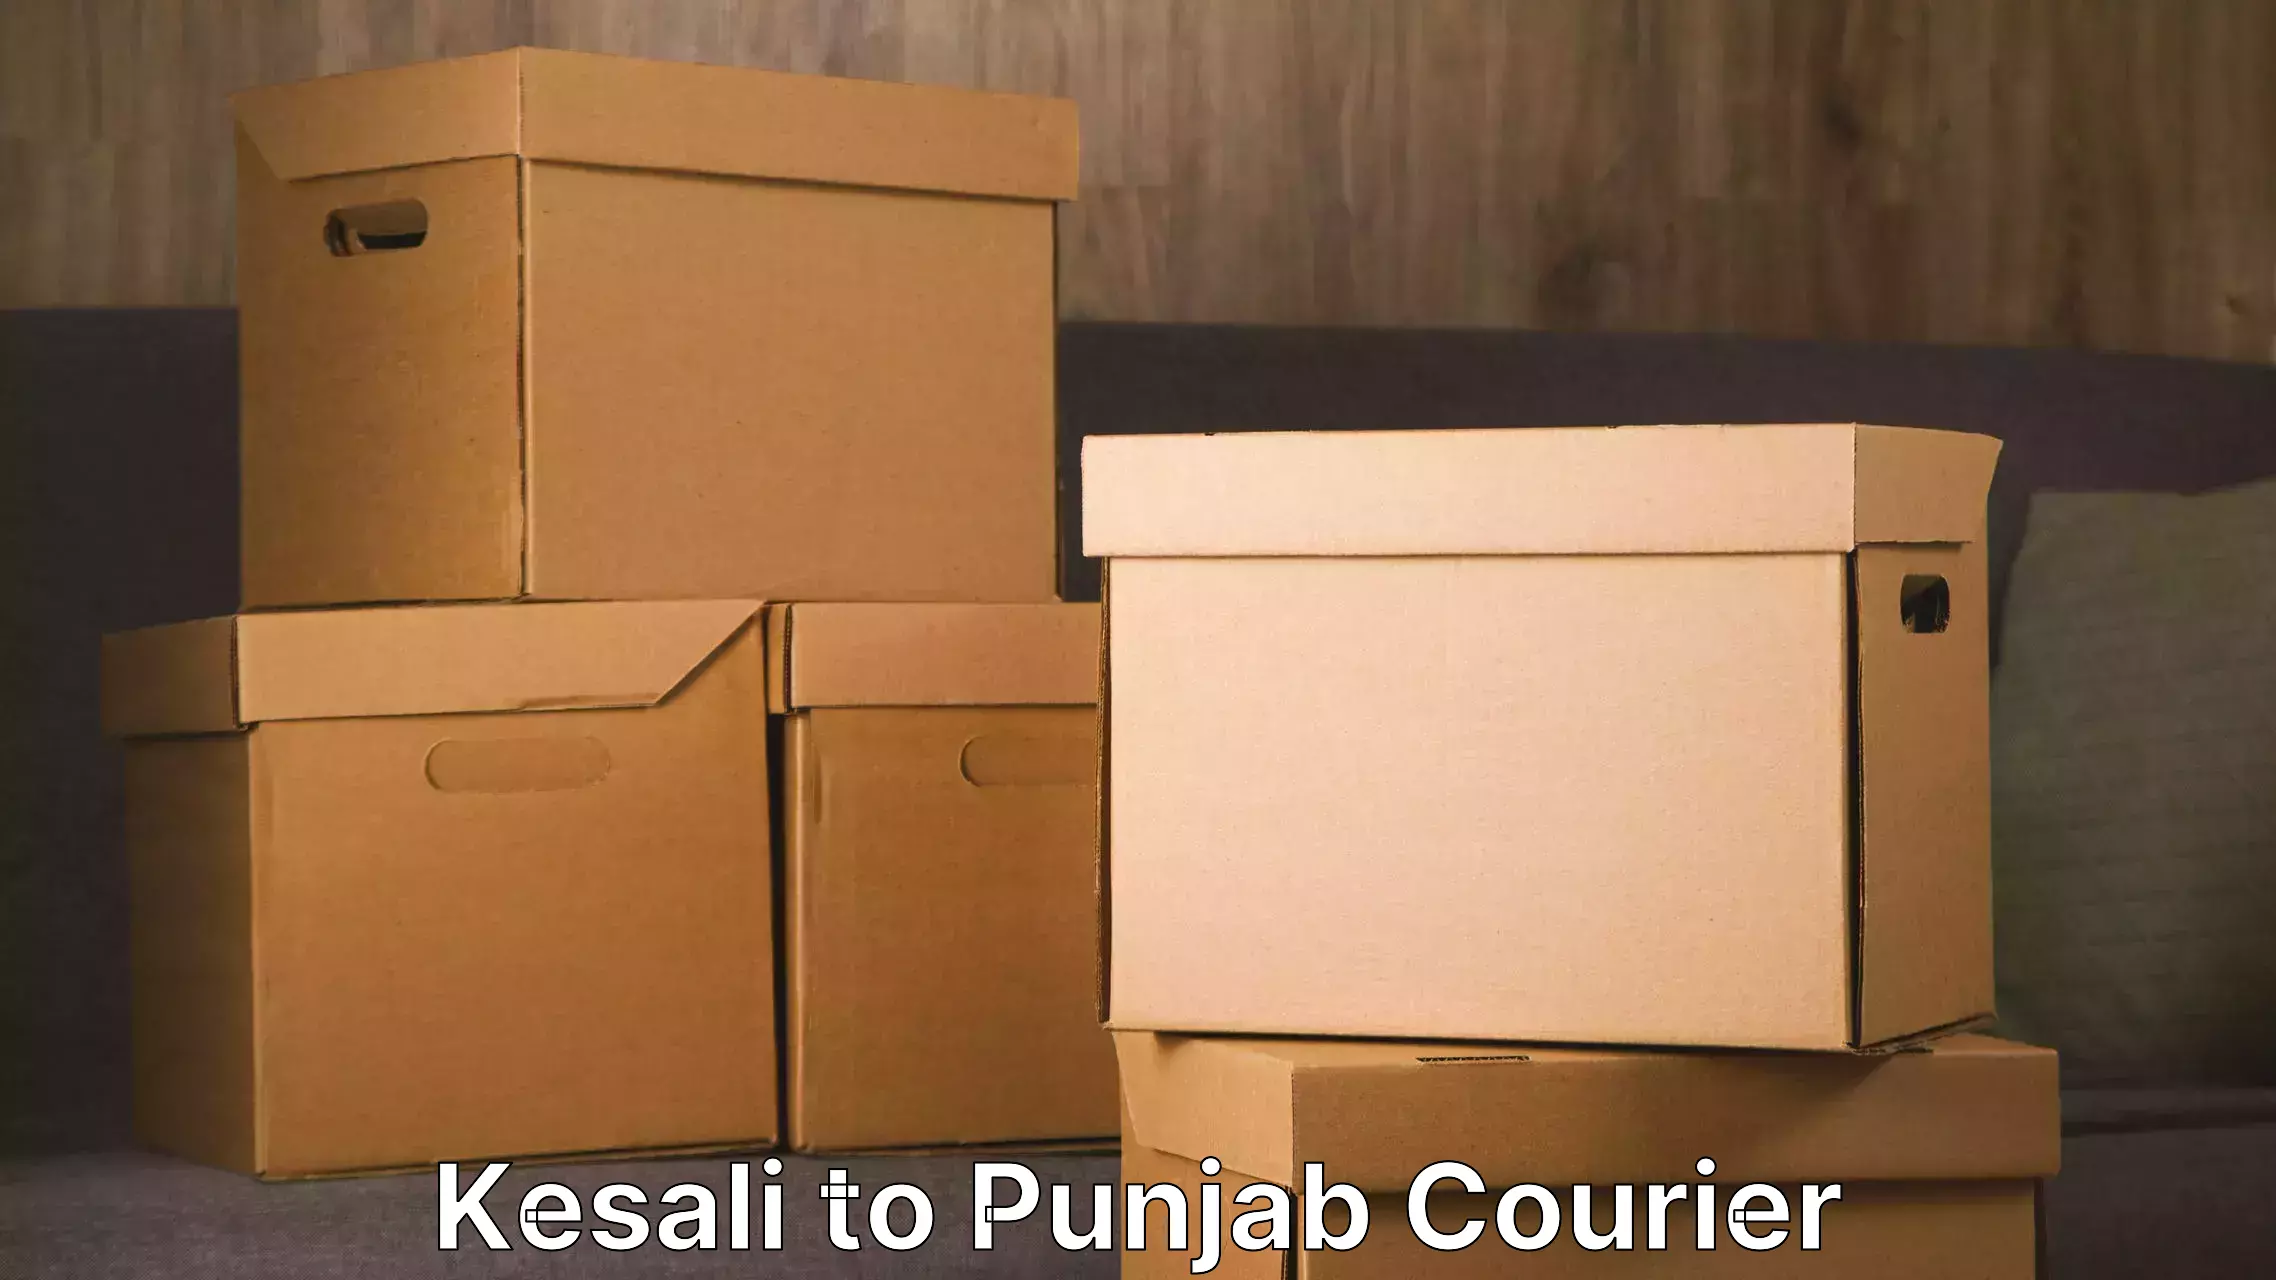 Furniture moving specialists Kesali to Punjab